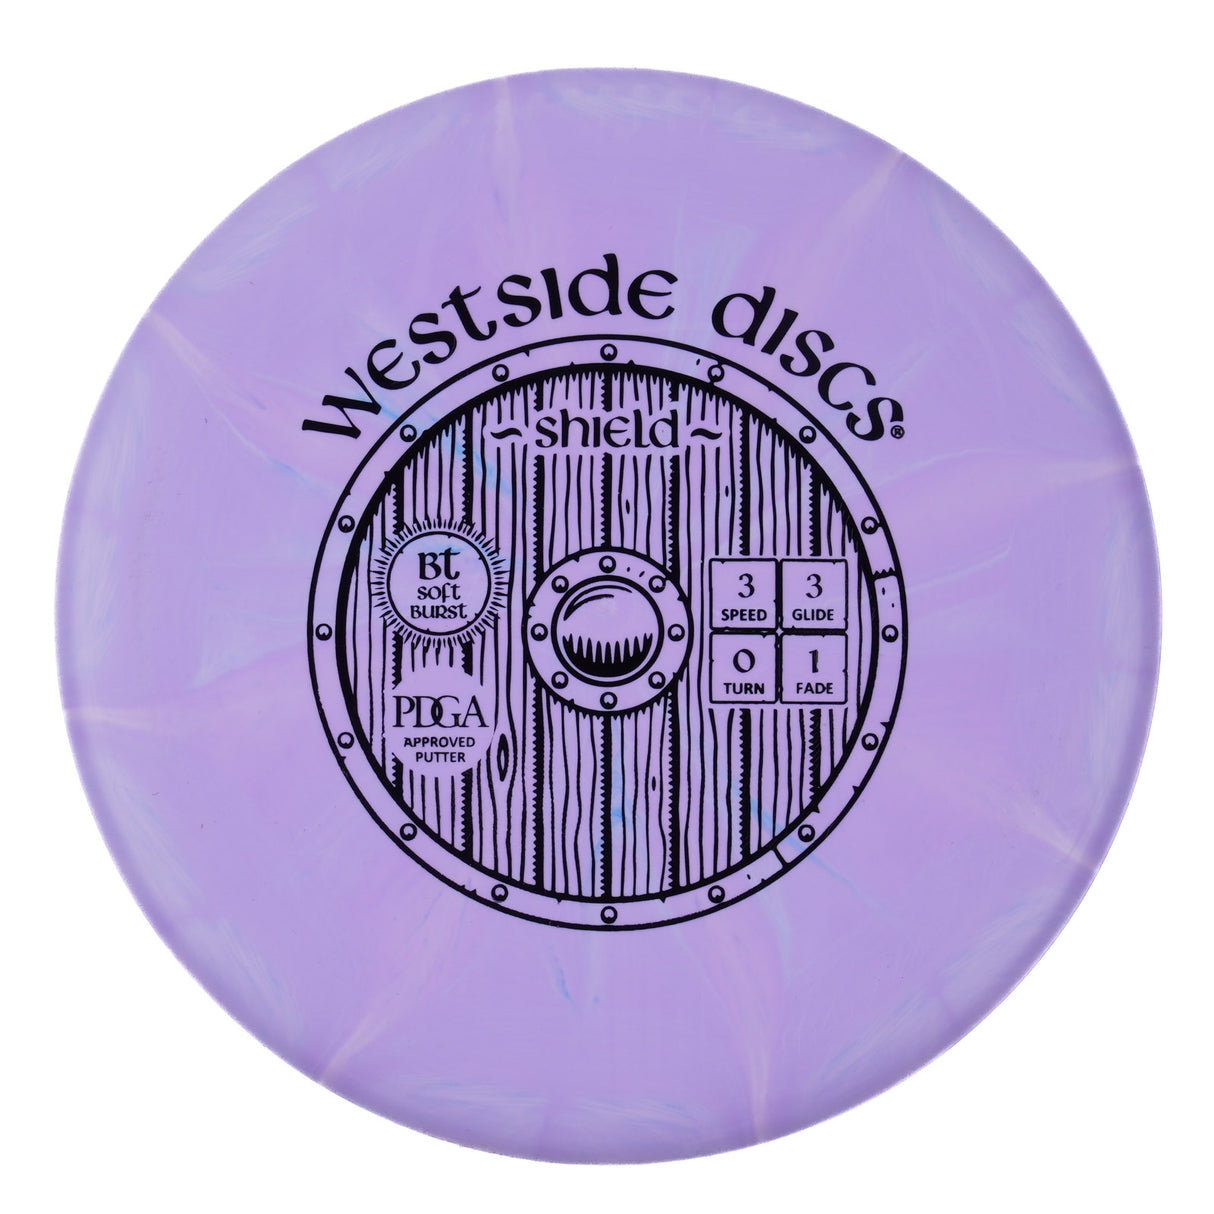 Westside Shield - BT Soft Burst 176g | Style 0004